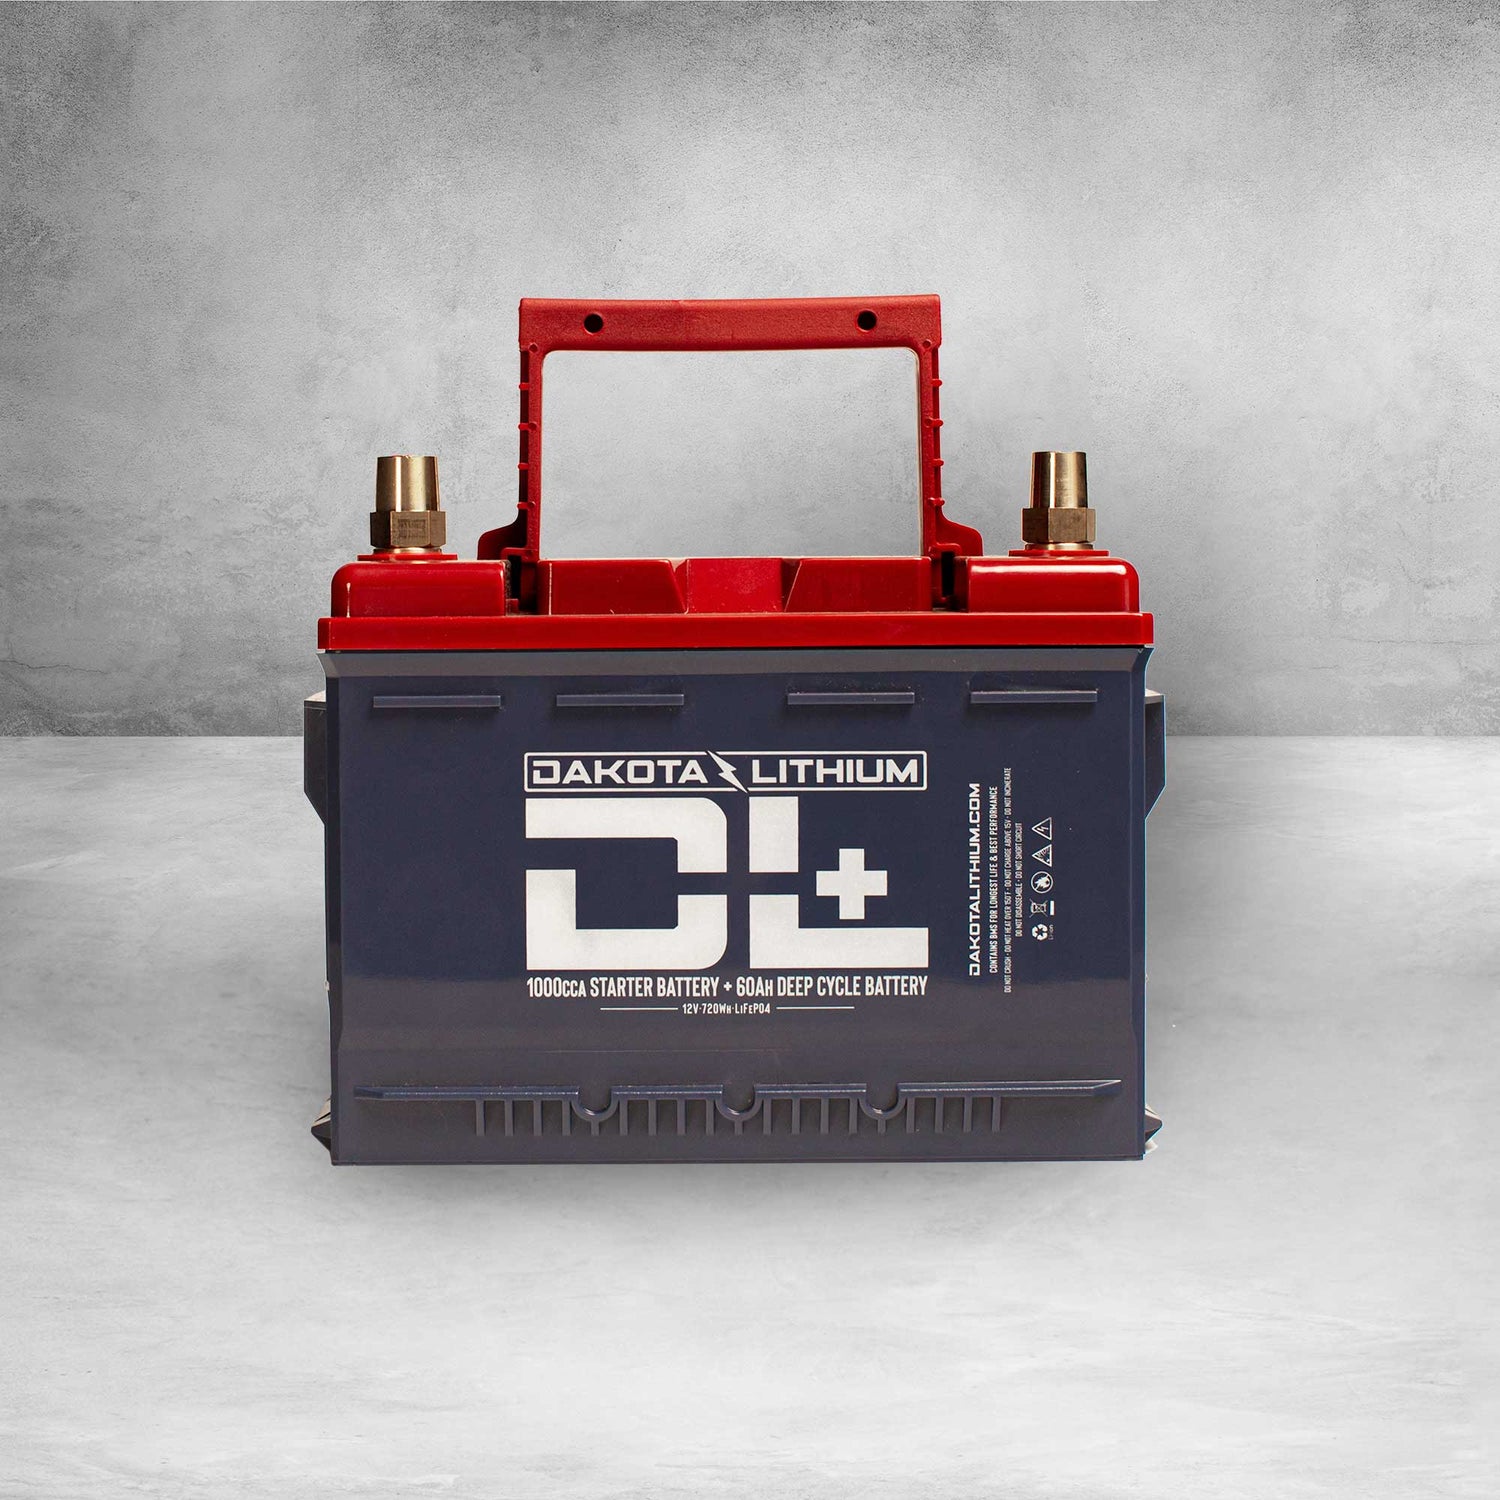 Dakota Lithium DL+ 12V 60Ah Dual Purpose 1000CCA Starter Battery Plus Deep Cycle Performance